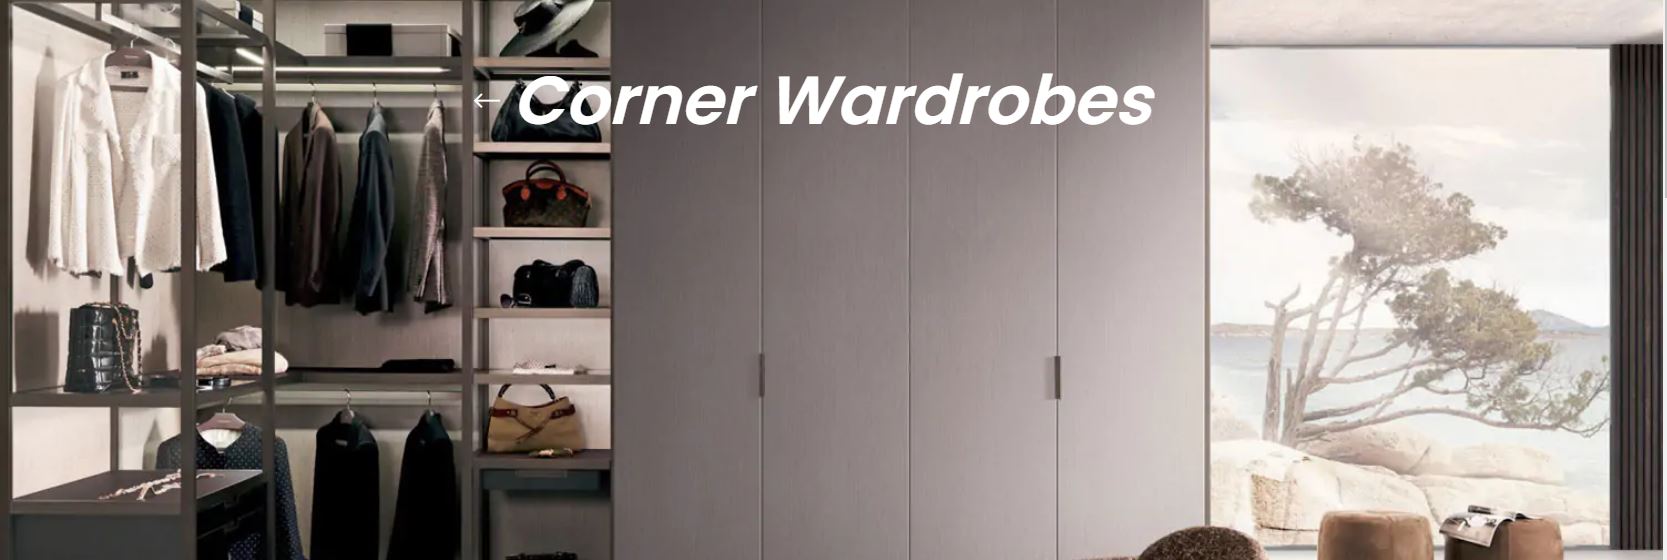 Corner wardrobes